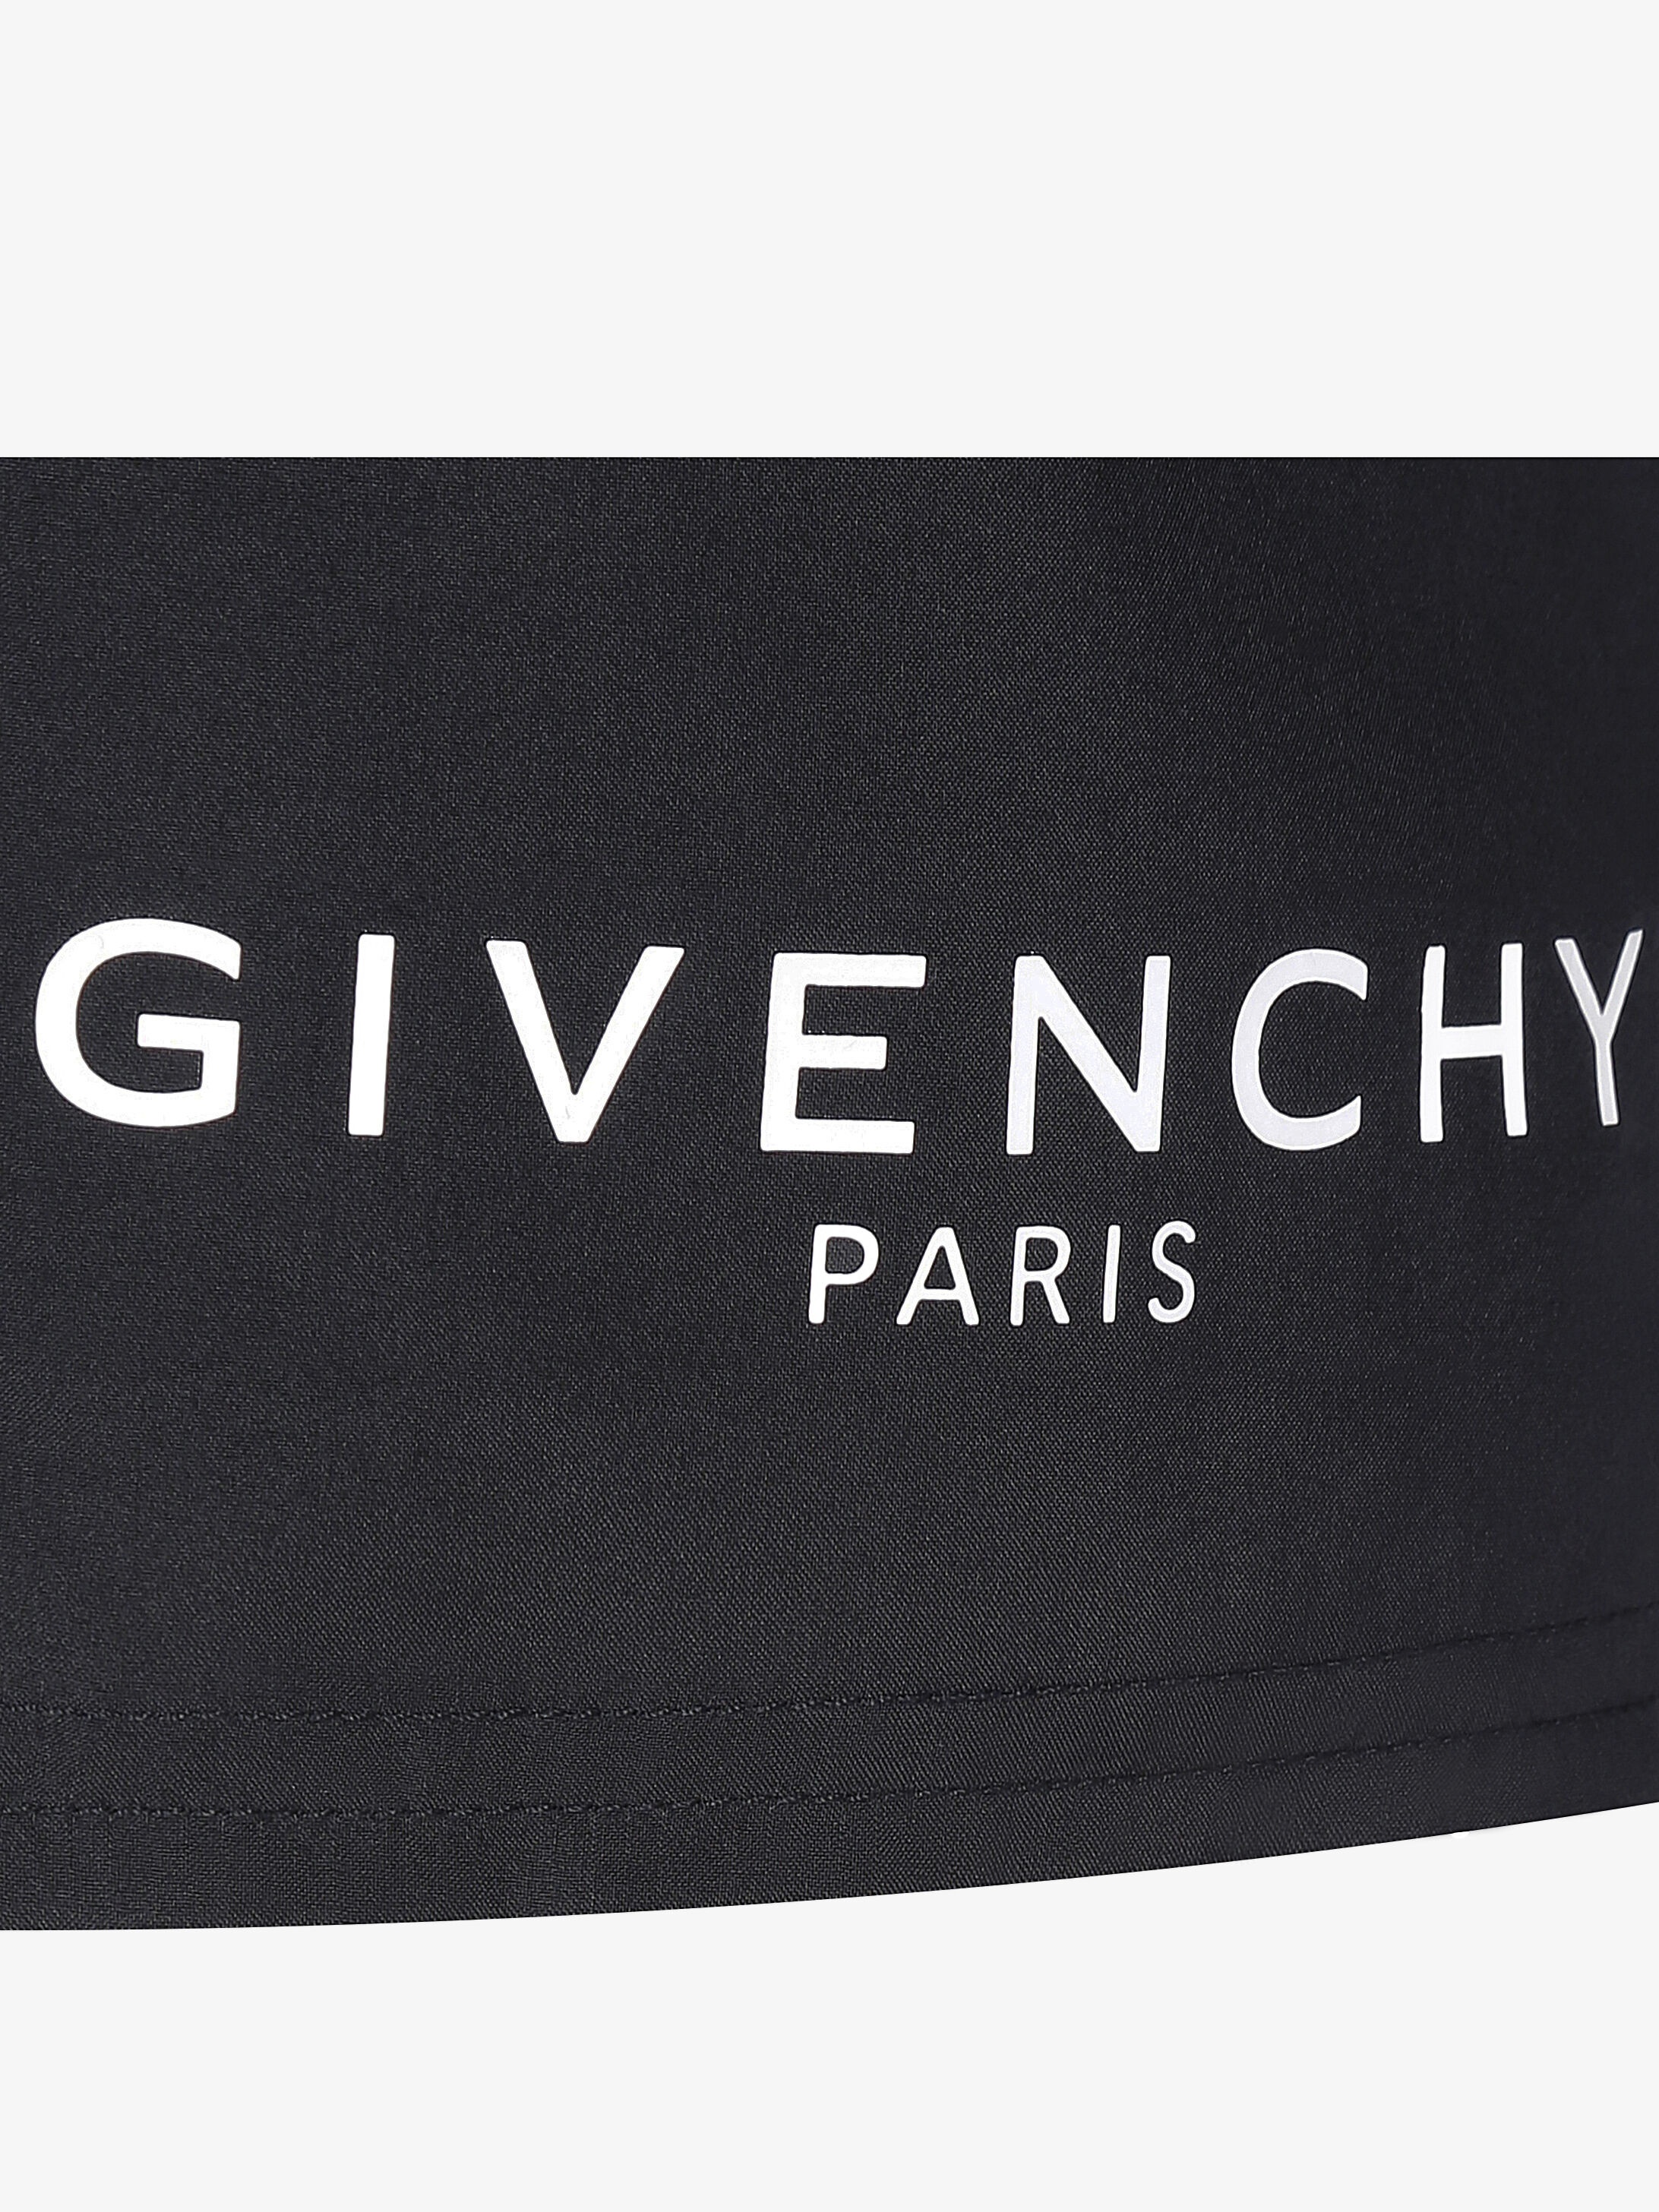 GIVENCHY PARIS long swim short - 5